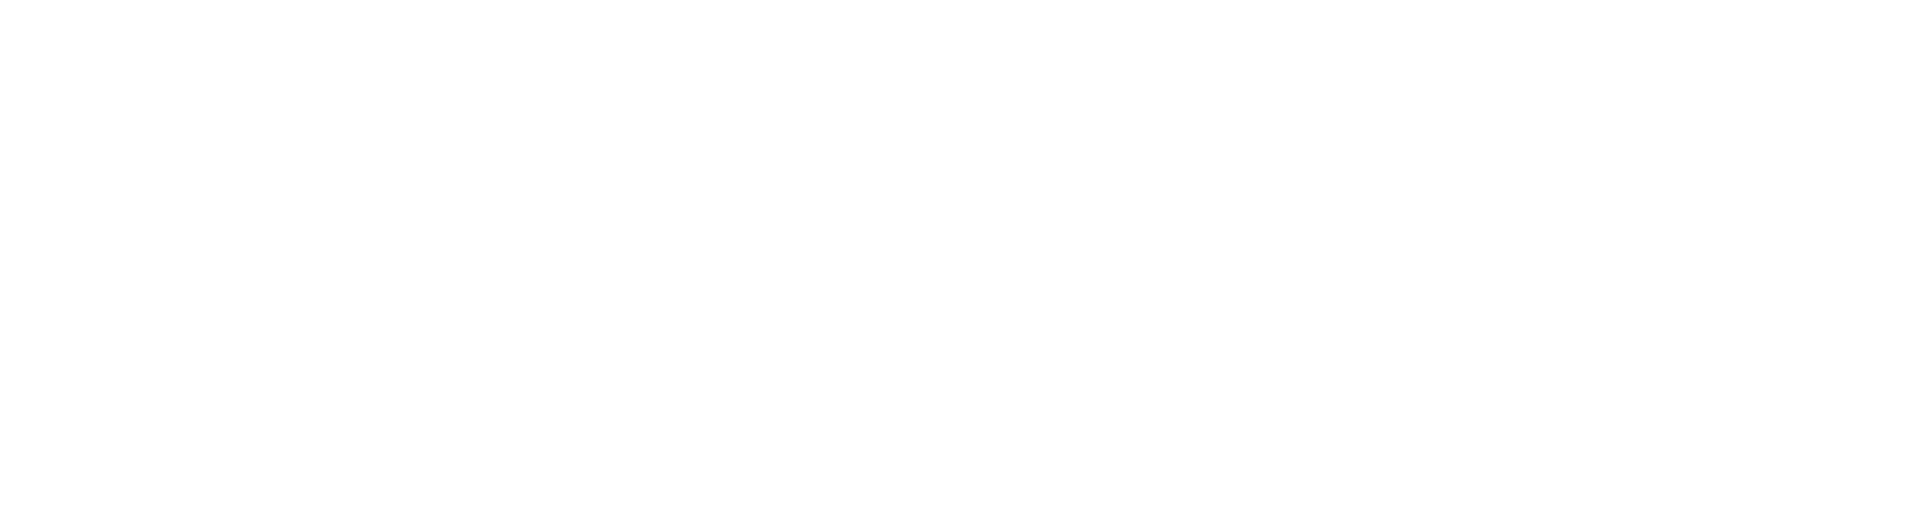 KLM Attorneys LLC Logo